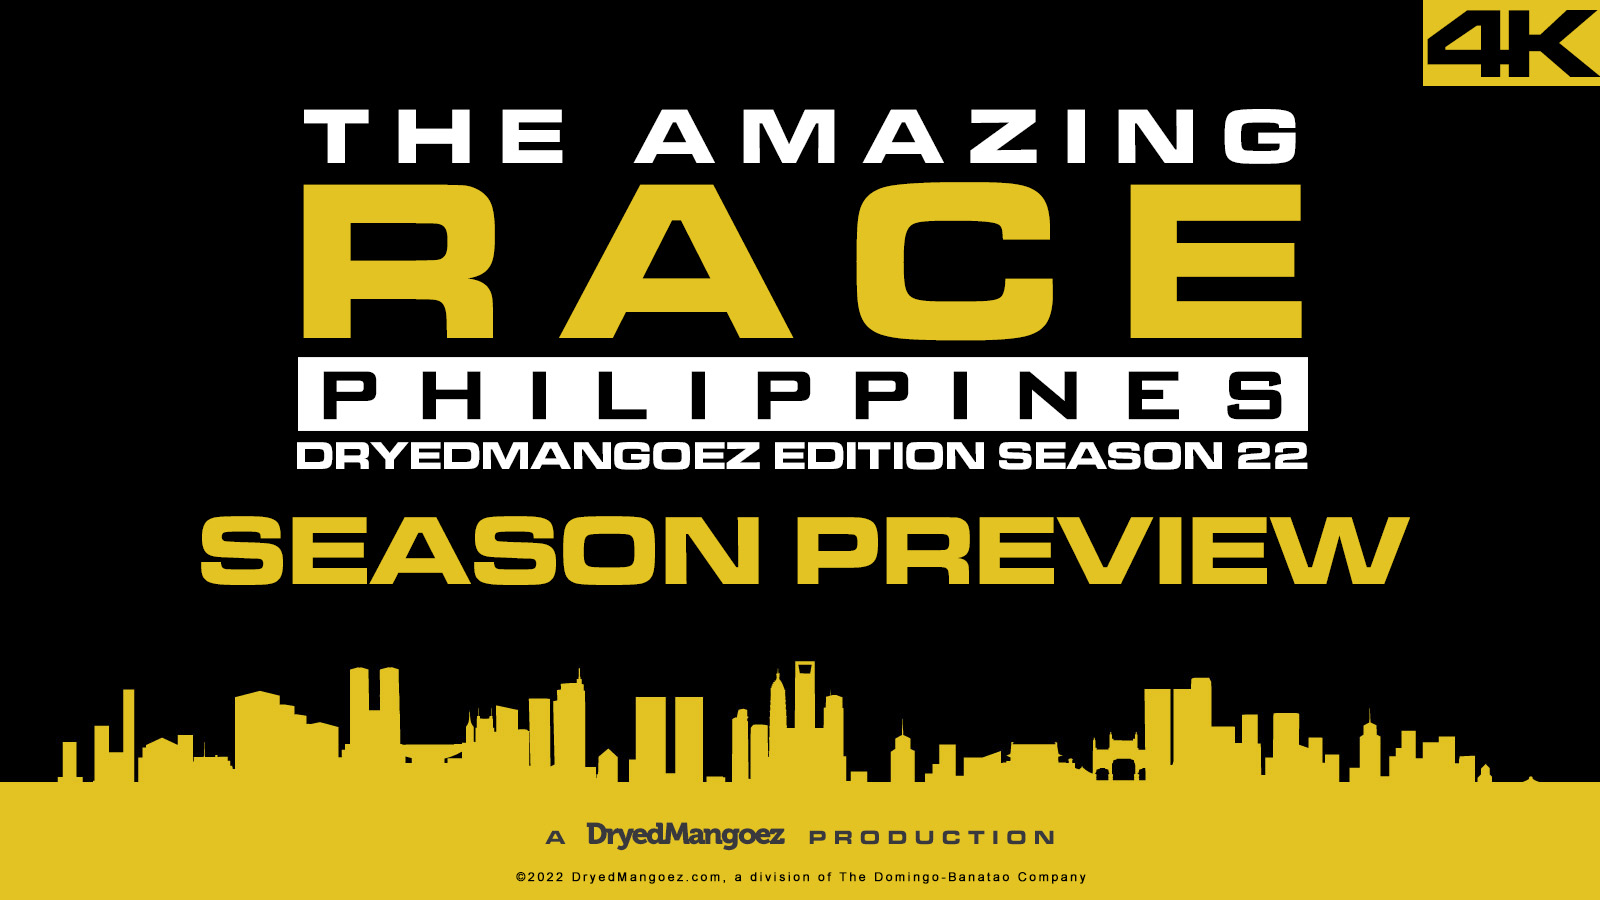 The Amazing Race Philippines: DryedMangoez Edition 22 Season Preview